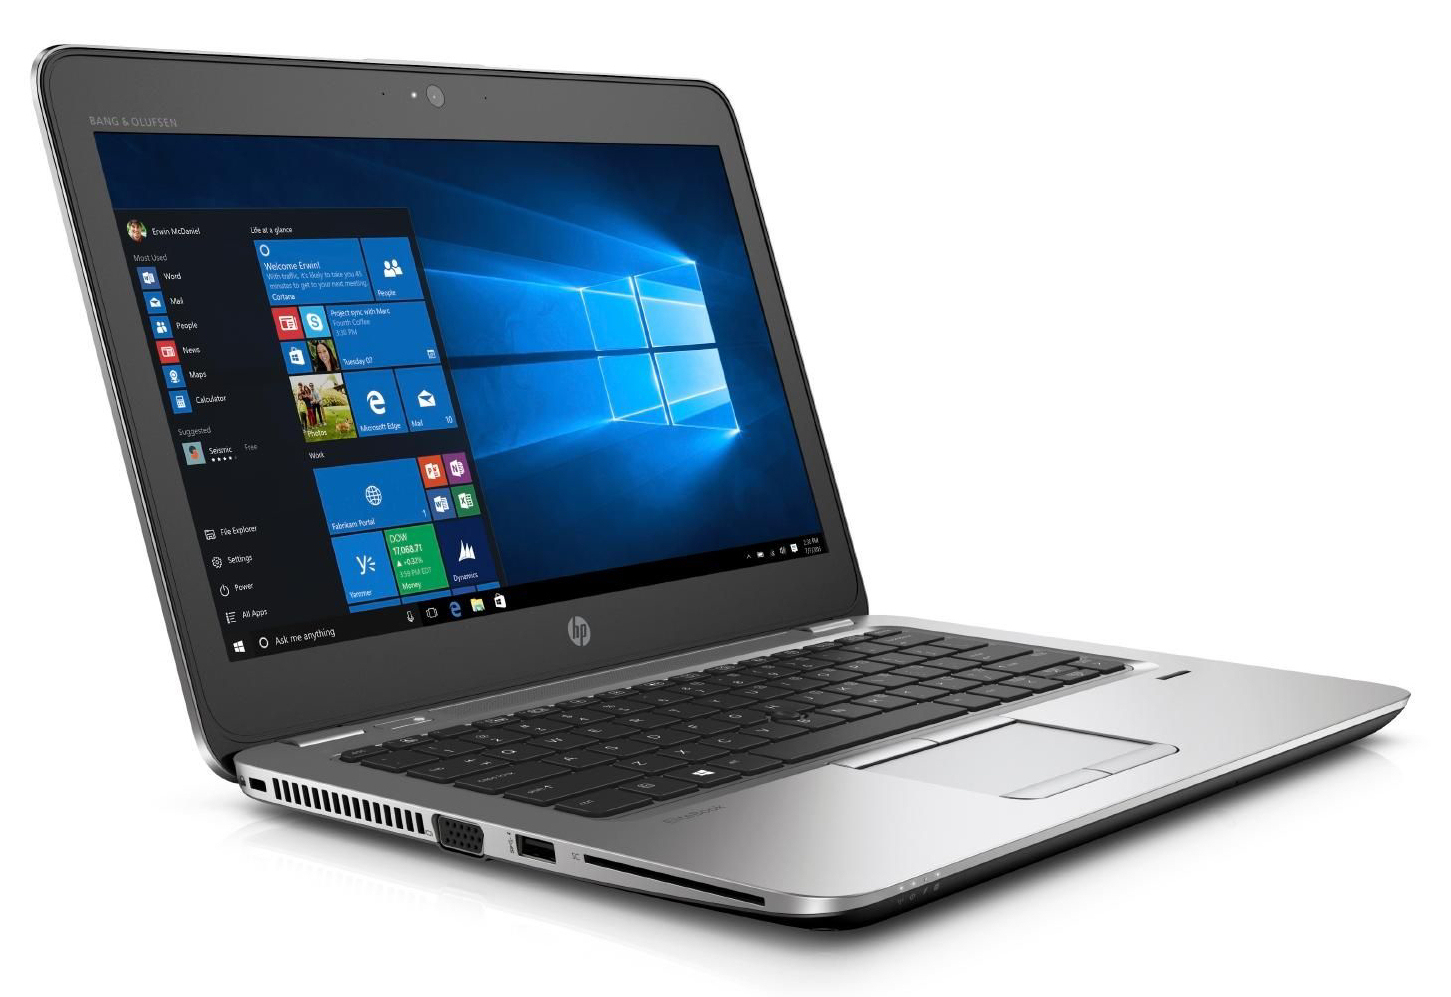 HP Elitebook 820 G4 Intel i5 7300u 2.60Ghz 8GB RAM 128GB SSD 12.5" Webcam Win 10 - B Grade Full Size Image